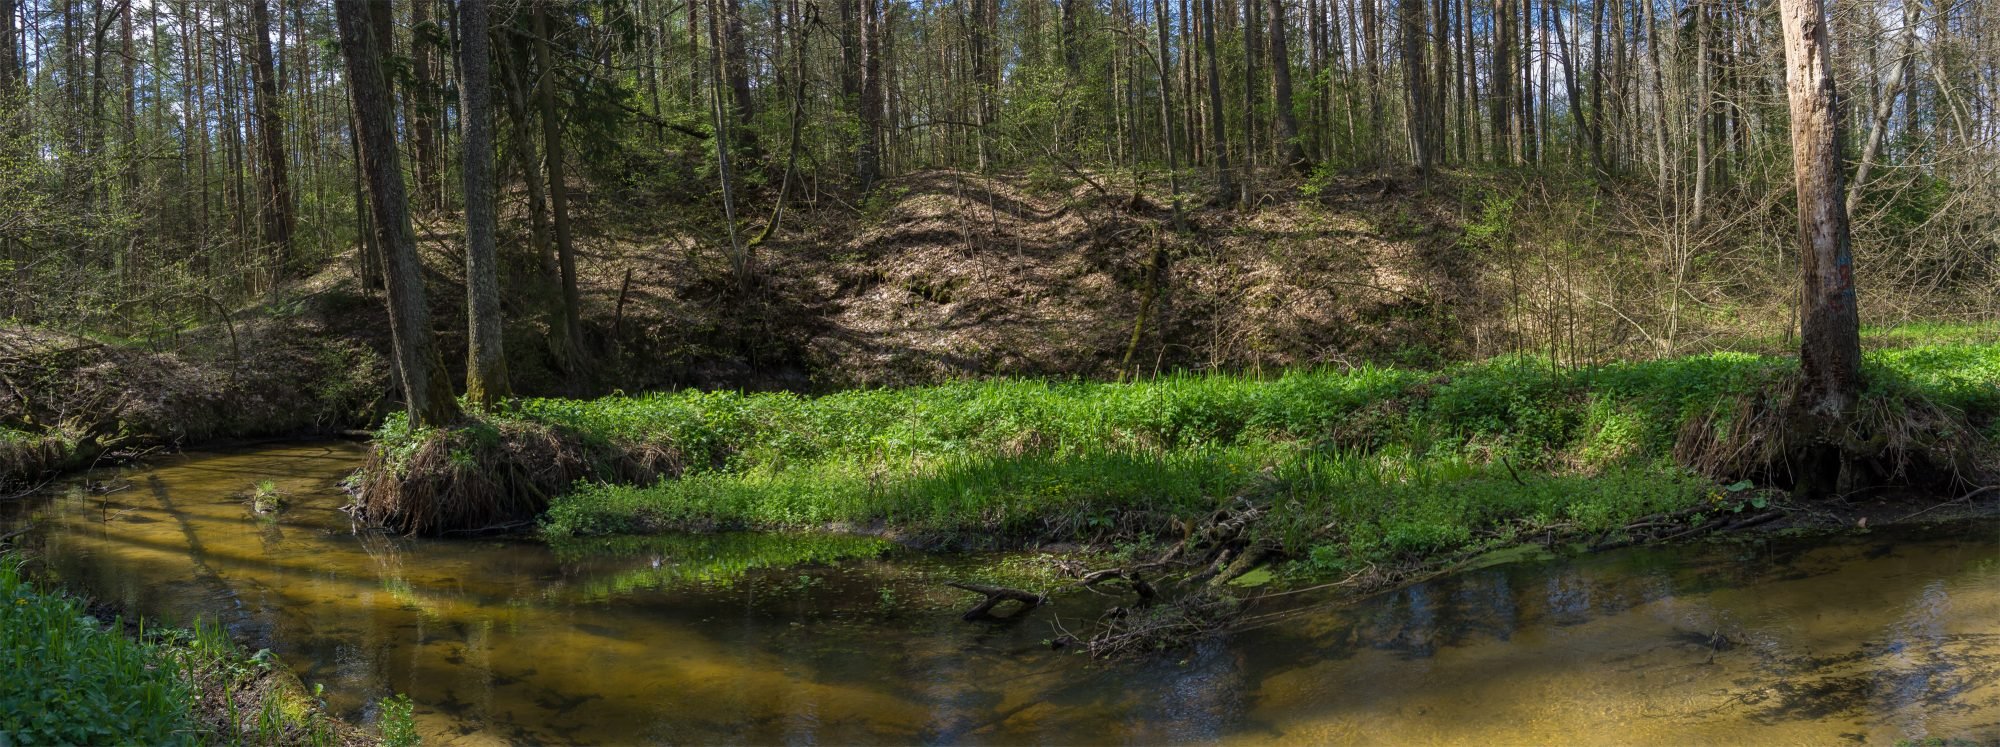 Балтский курган на берегу речки